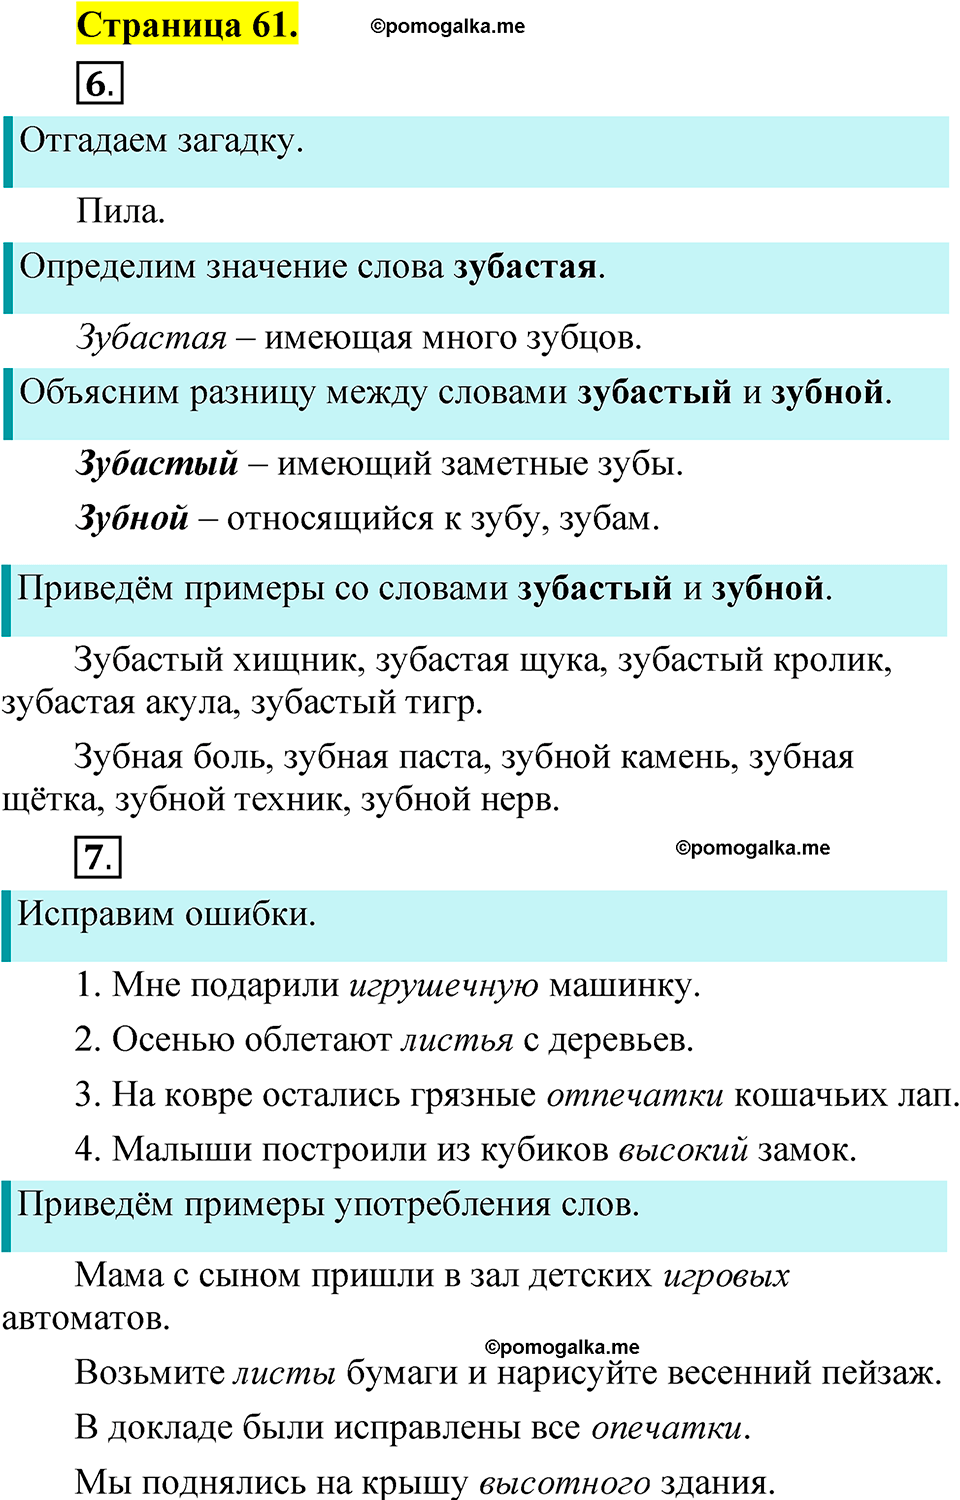 страница 61 русский язык 1 класс Александрова 2023